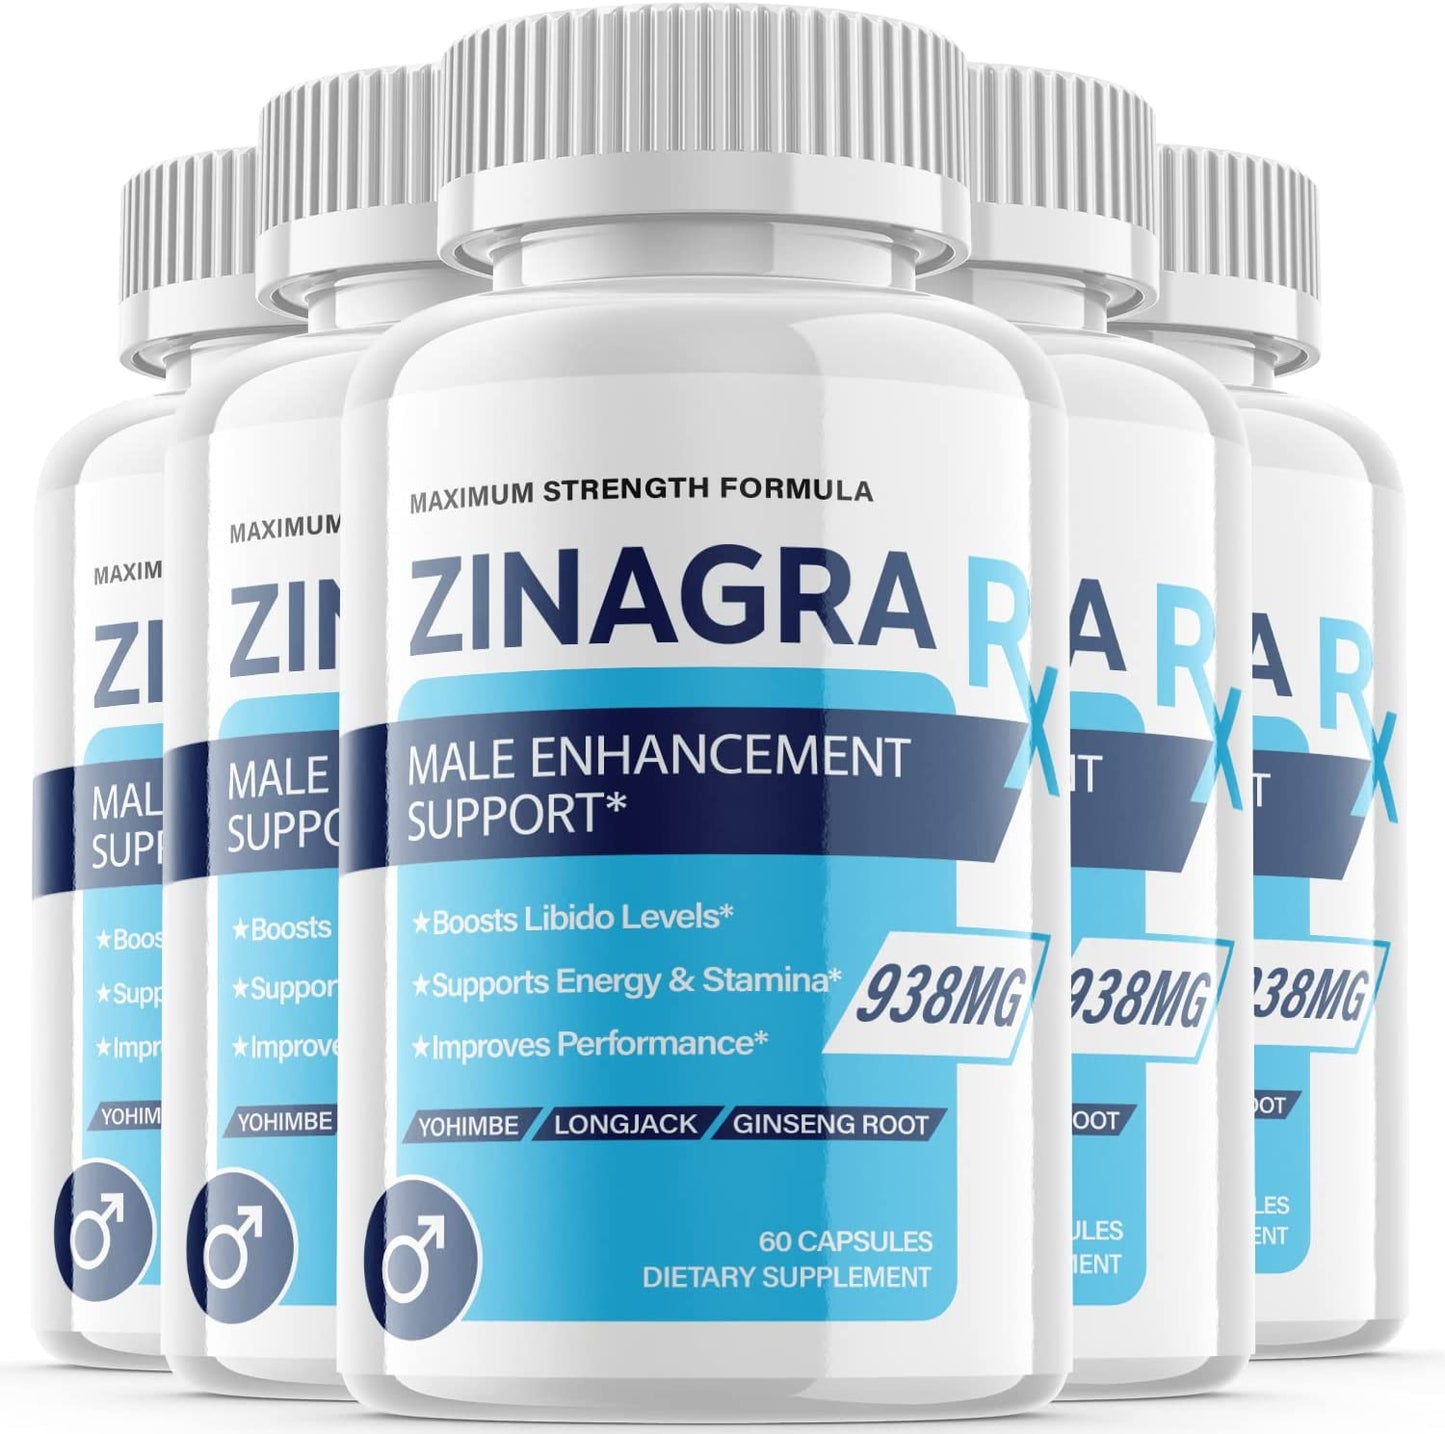 Zinagra RX Male Enhancement Pills